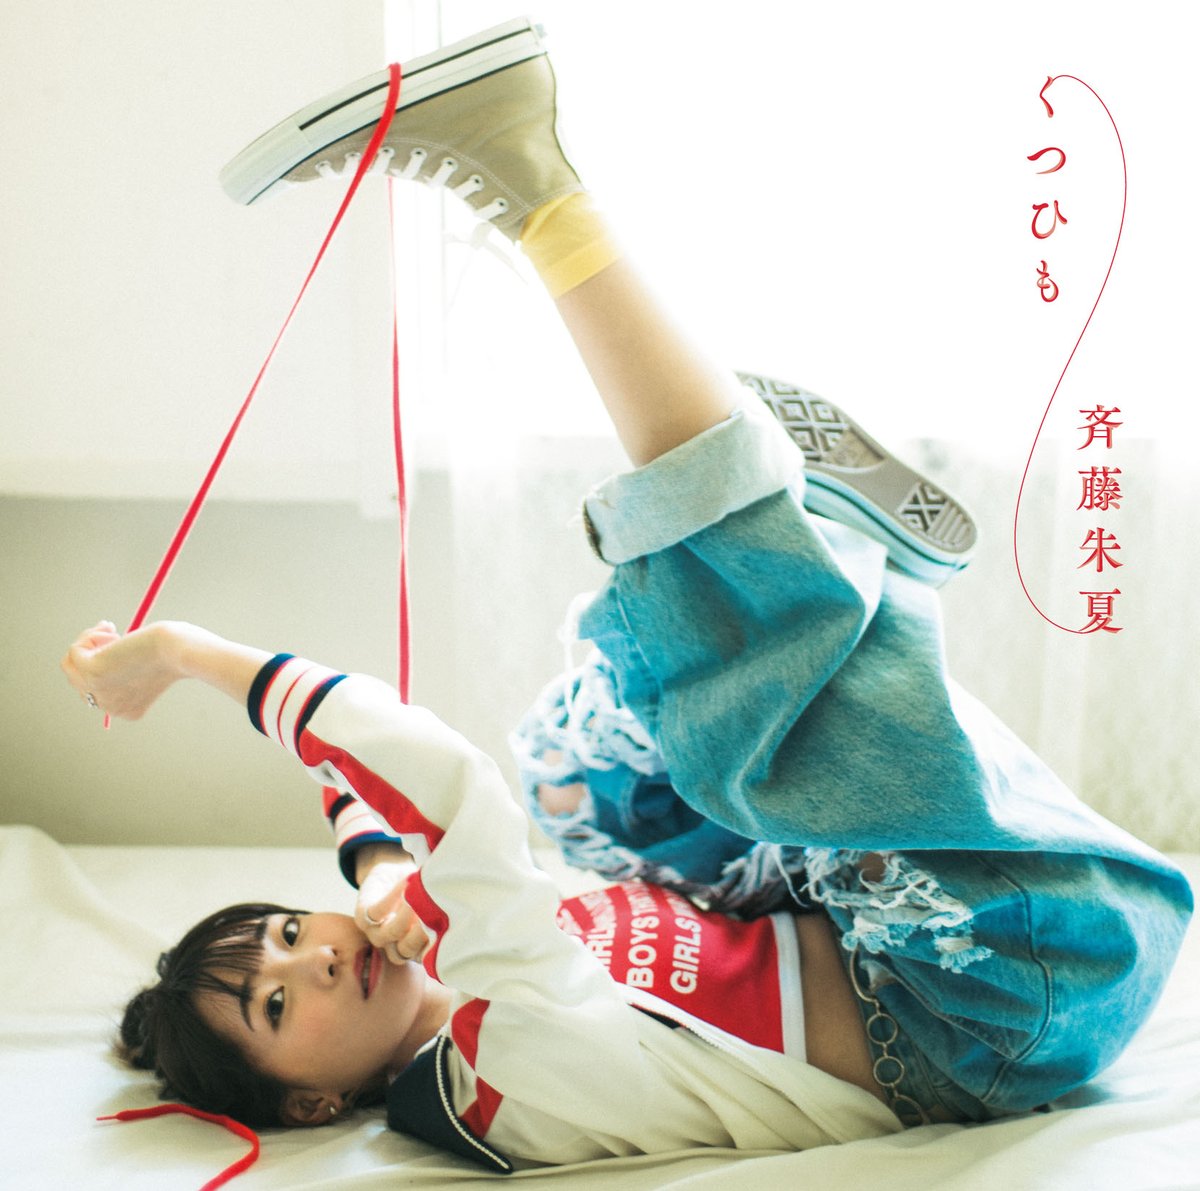 Cover for『Shuka Saito - Ato 1 Meter』from the release『Kutsuhimo』